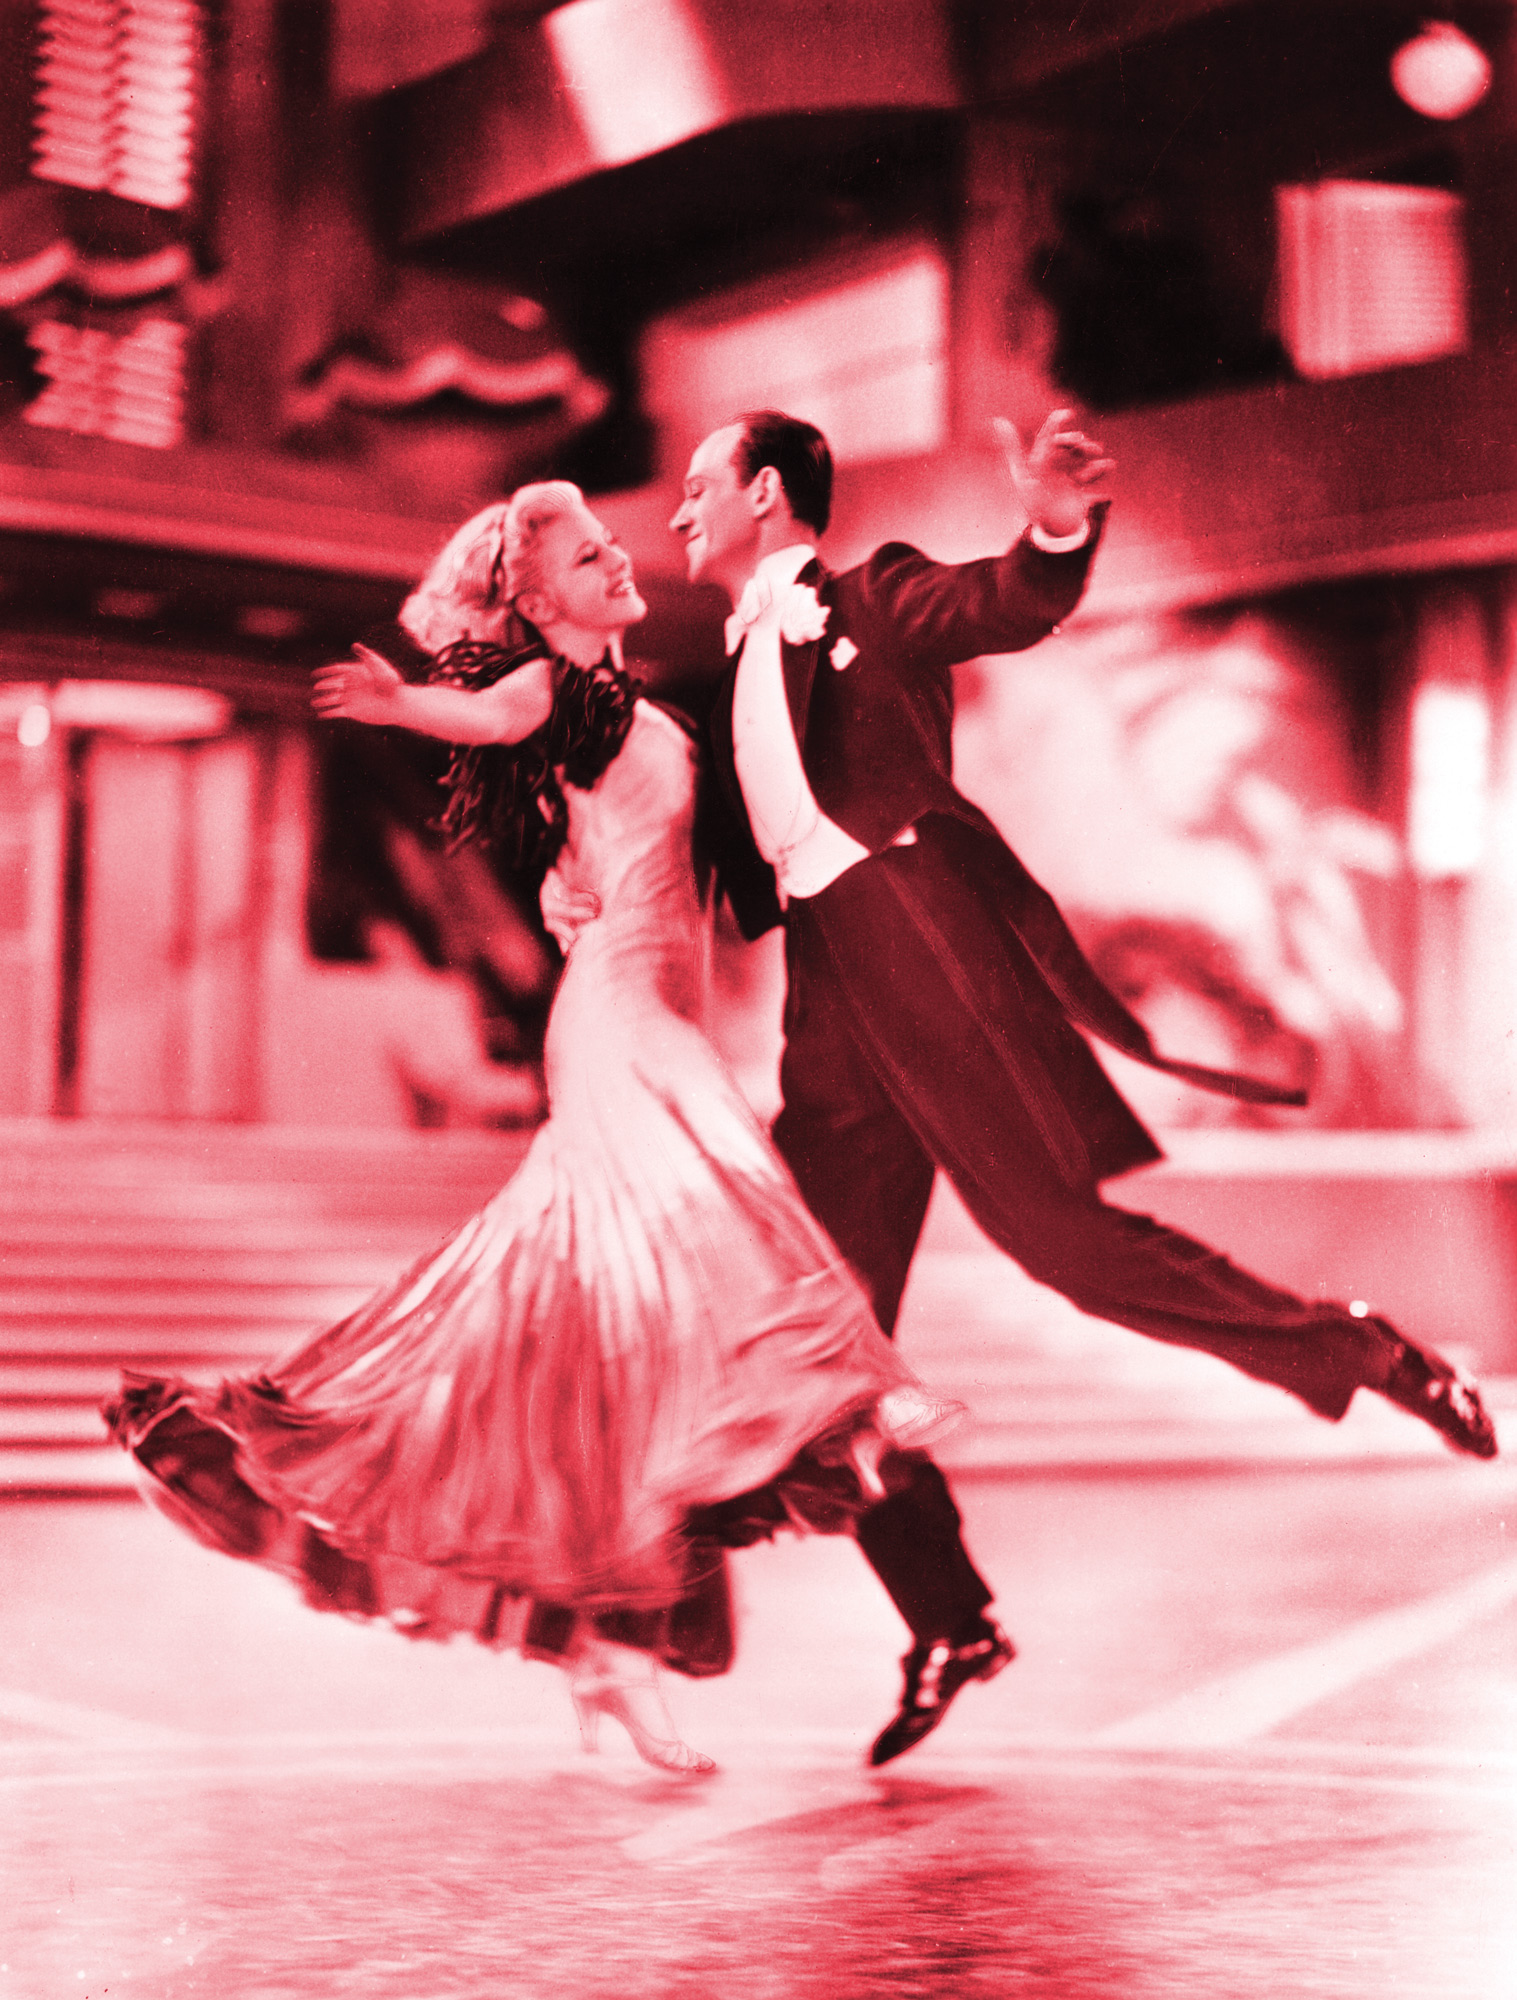 Man and woman dancing on set